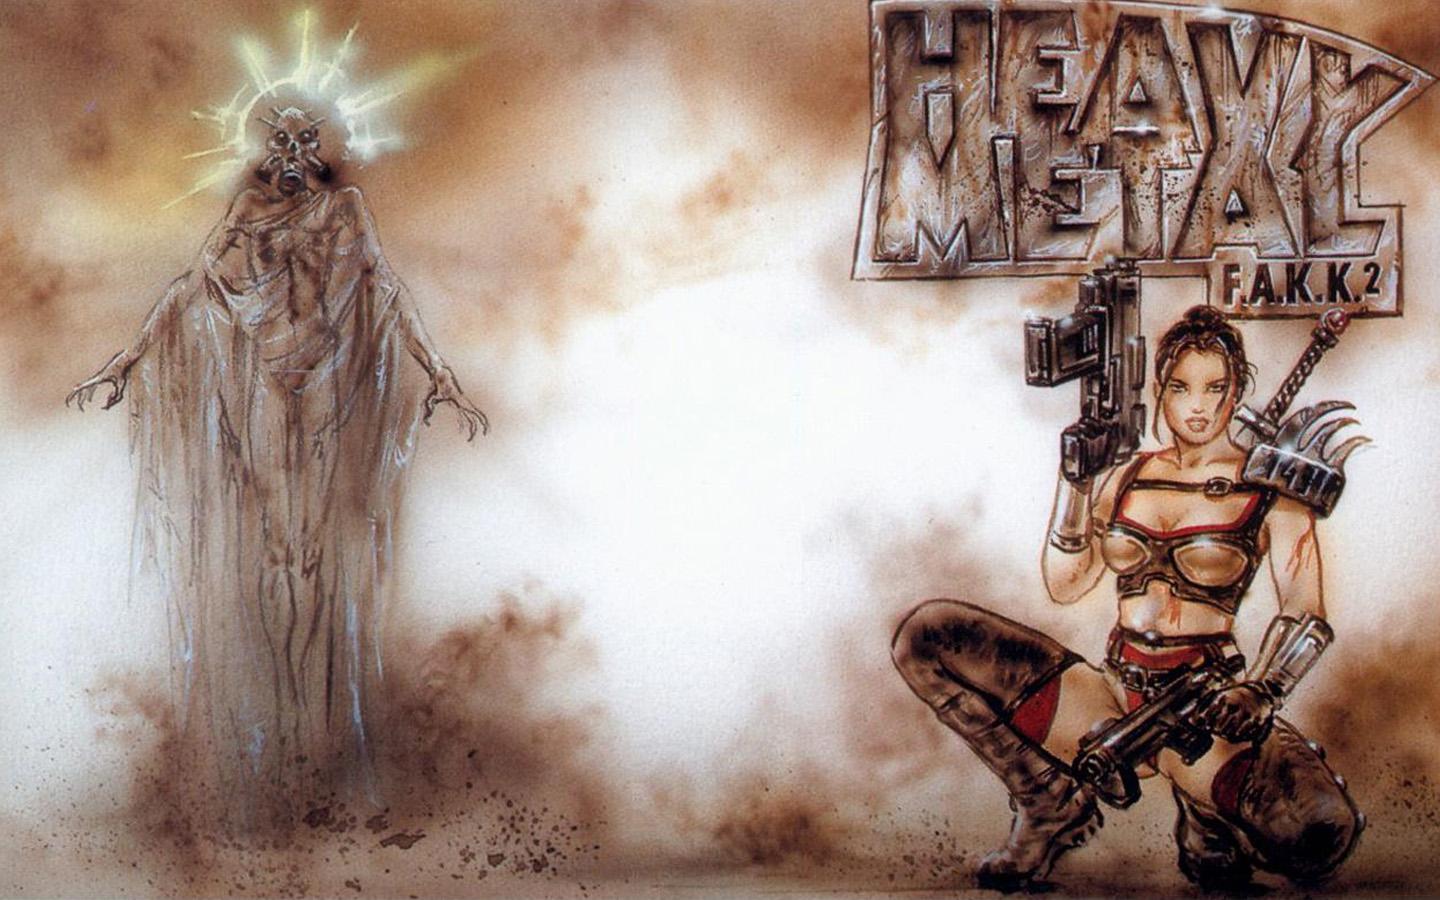 Heavy Metal Wallpaper